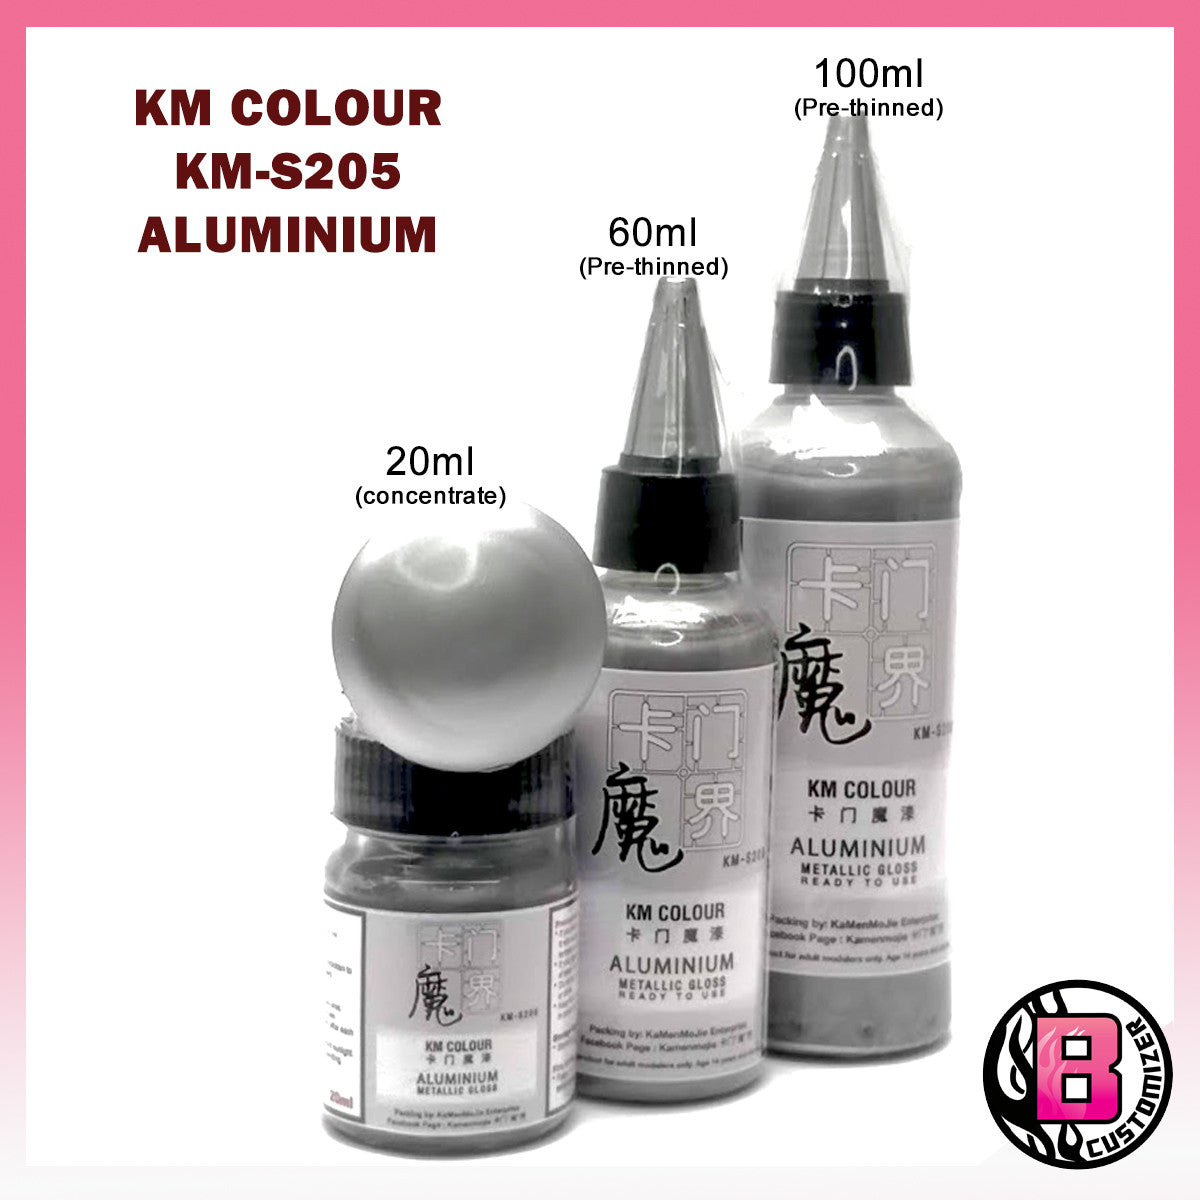 KM Colour Aluminum (KM-S205)